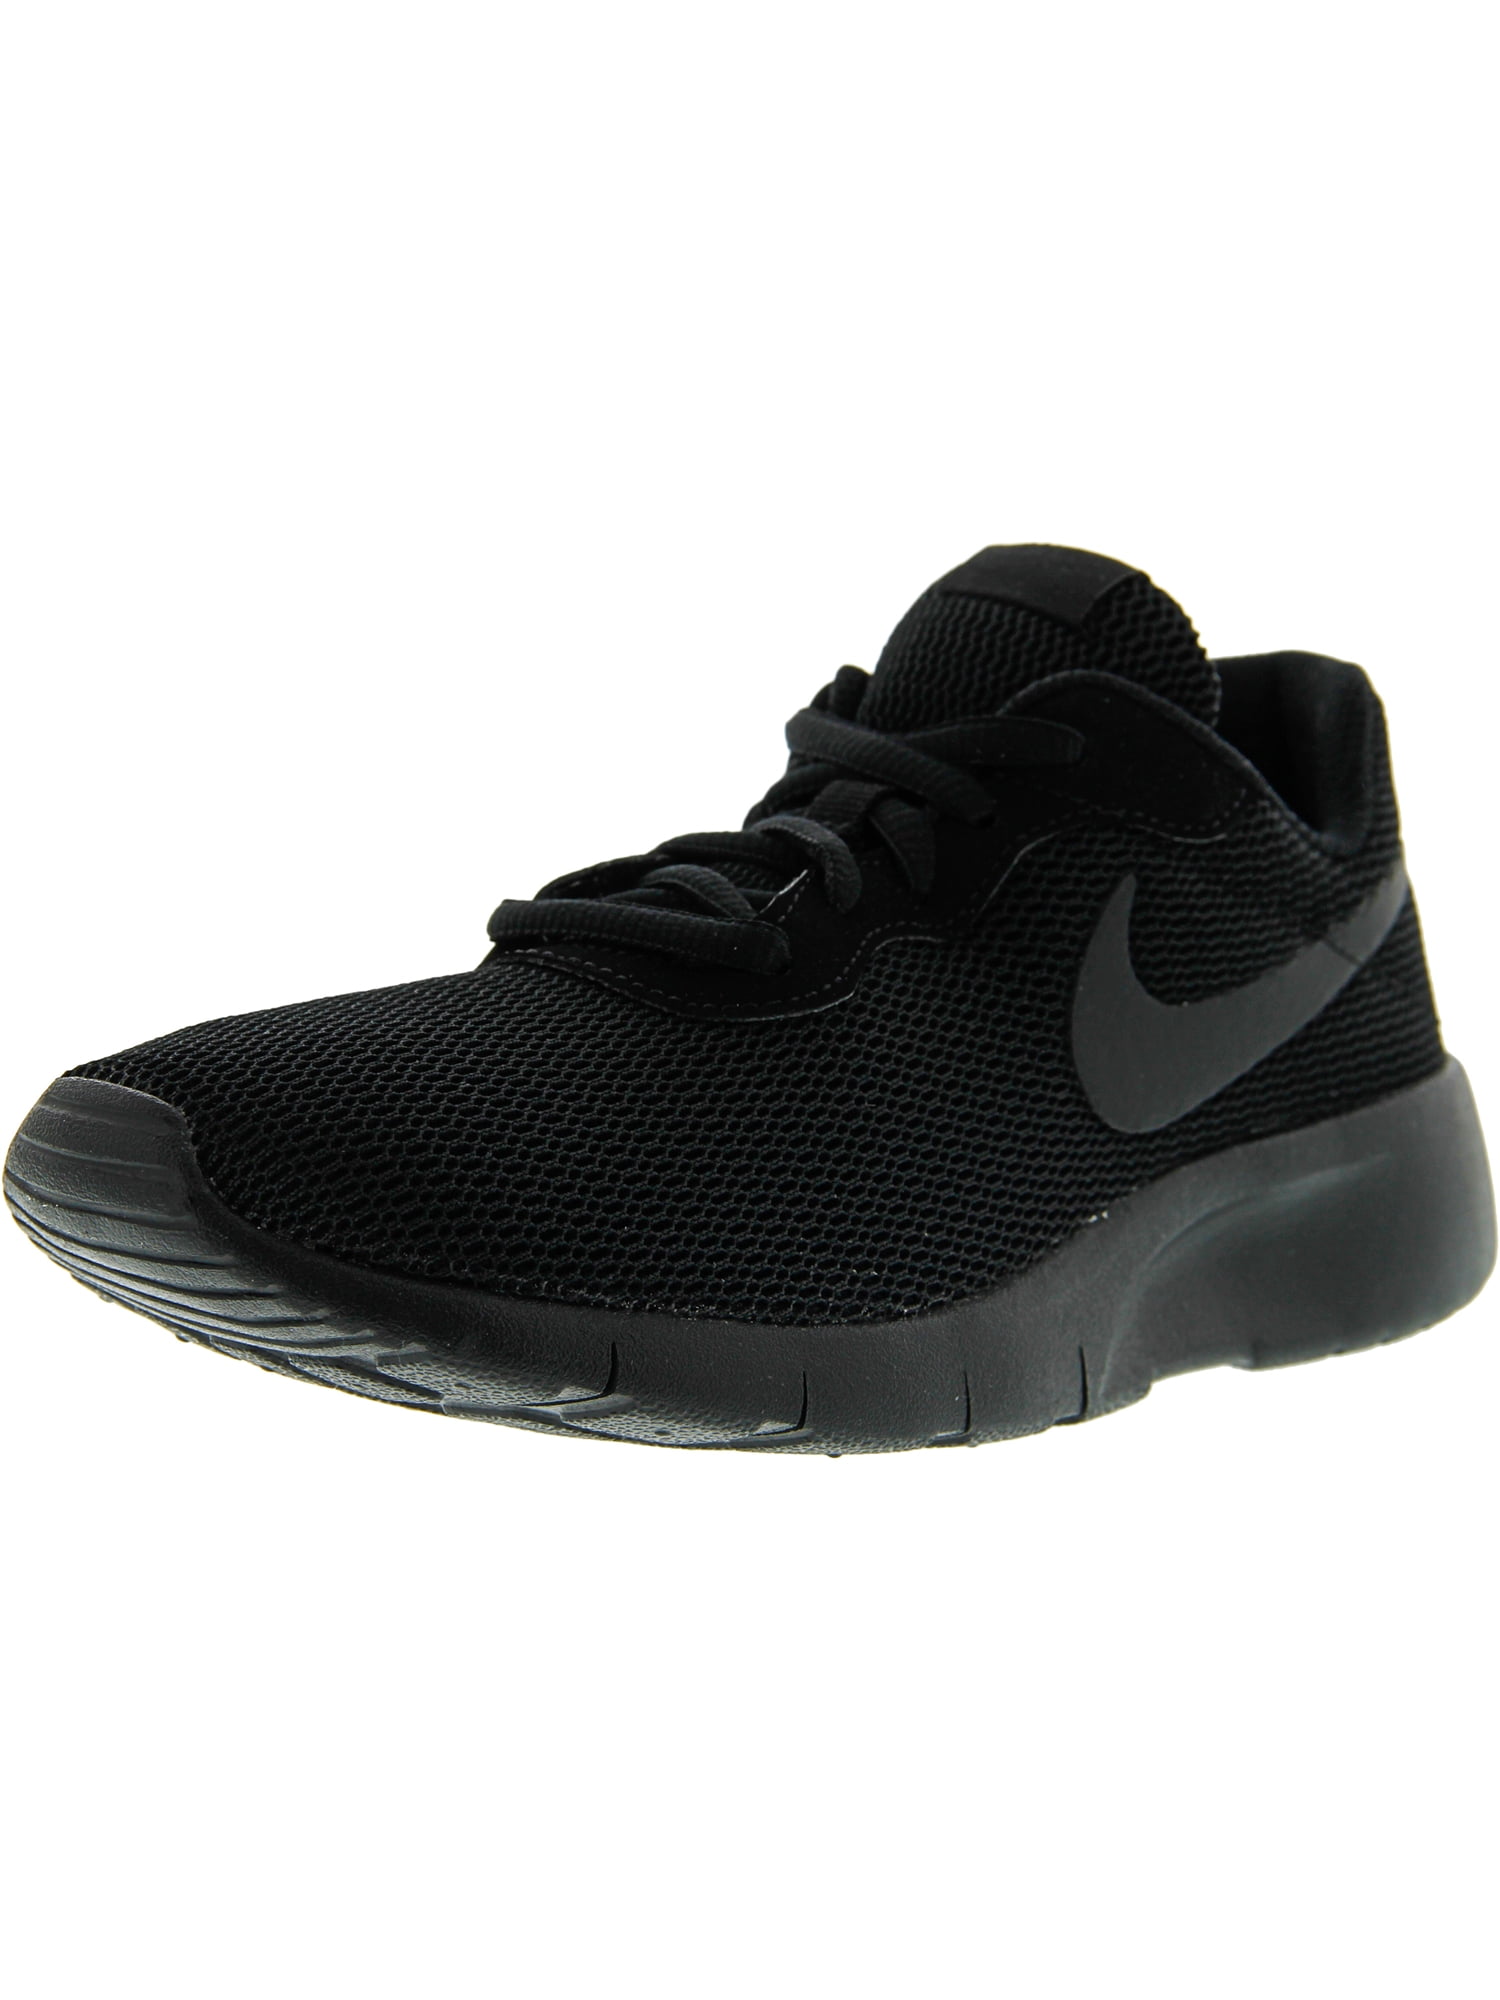 Nike Tanjun Black / Ankle-High Mesh Running Shoe 3.5M - Walmart.com